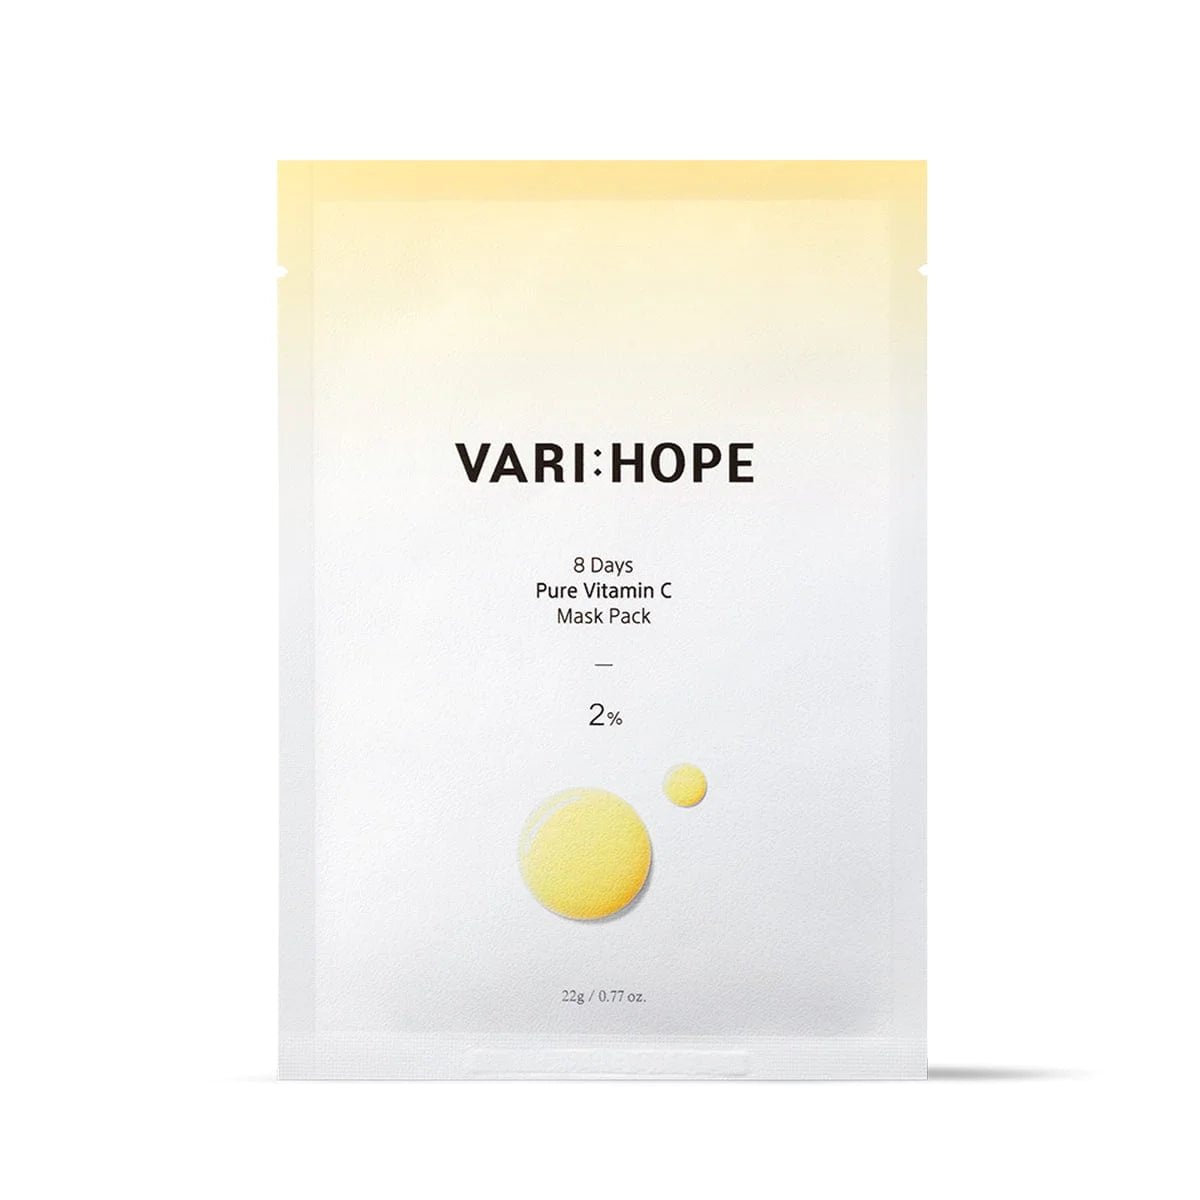 VARIHOPE 8 Days Pure Vitamin C Mask Pack 171g